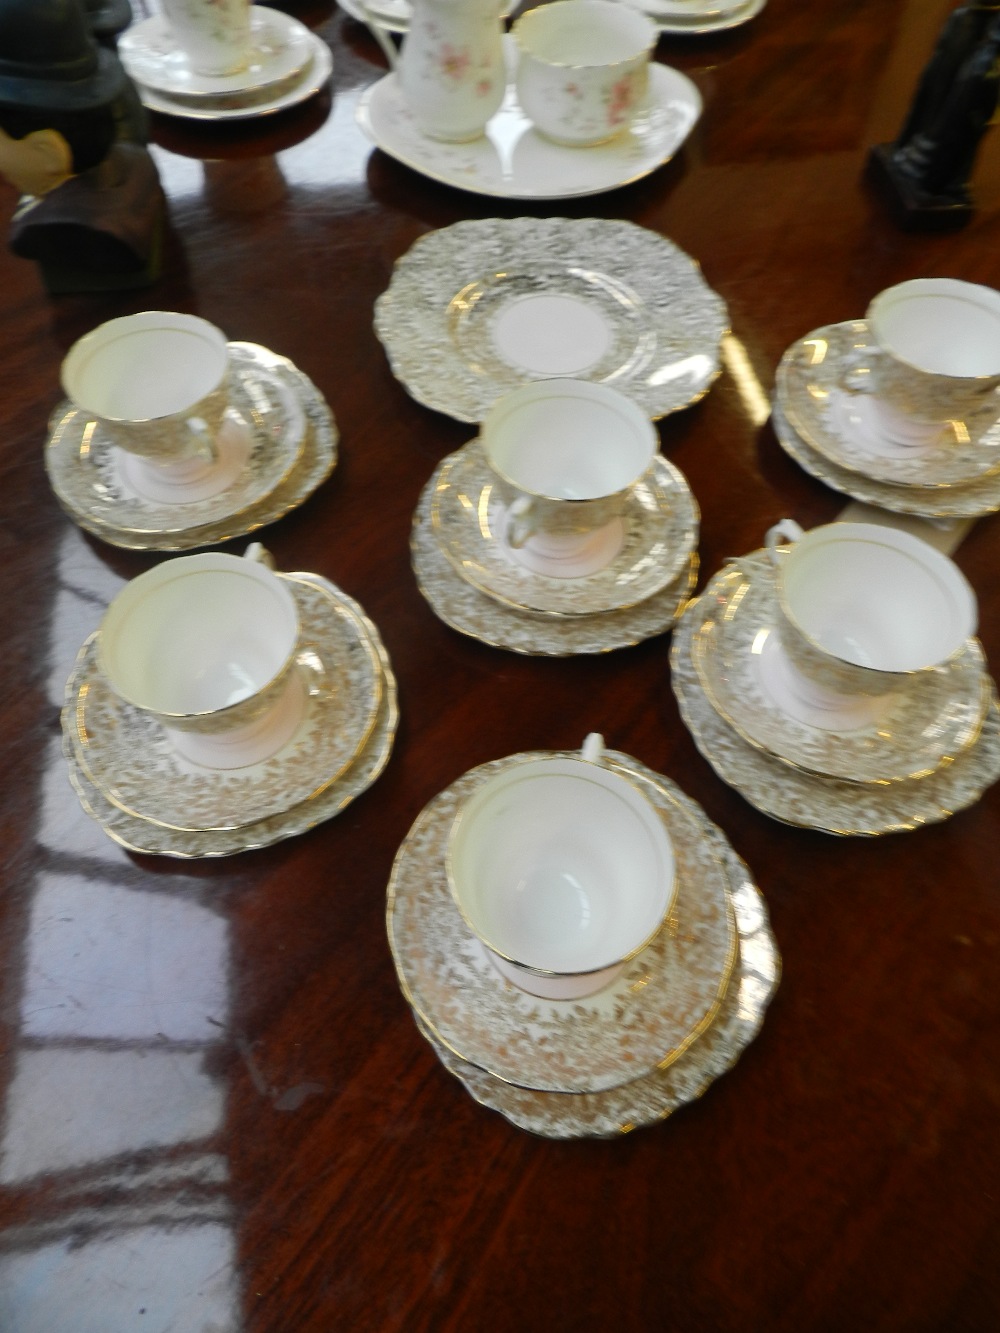 A gold and white Colclough china tea service.